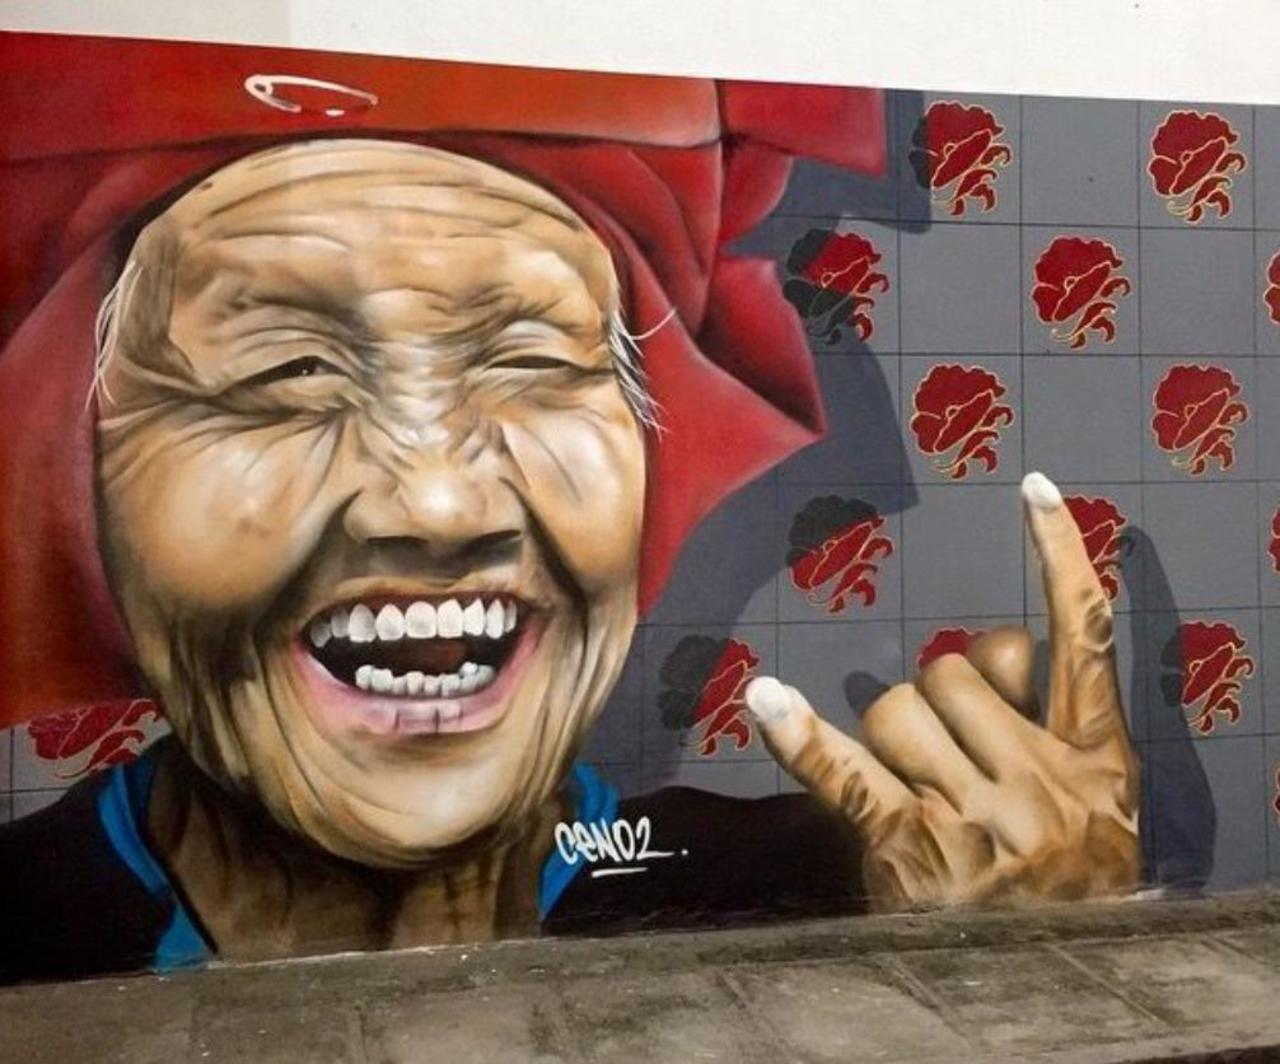 RT @streetartnow: “@hypatia373: #art #streetart #graffiti http://t.co/Yr9KYKG2vV” Our favourite work this week! So funny!